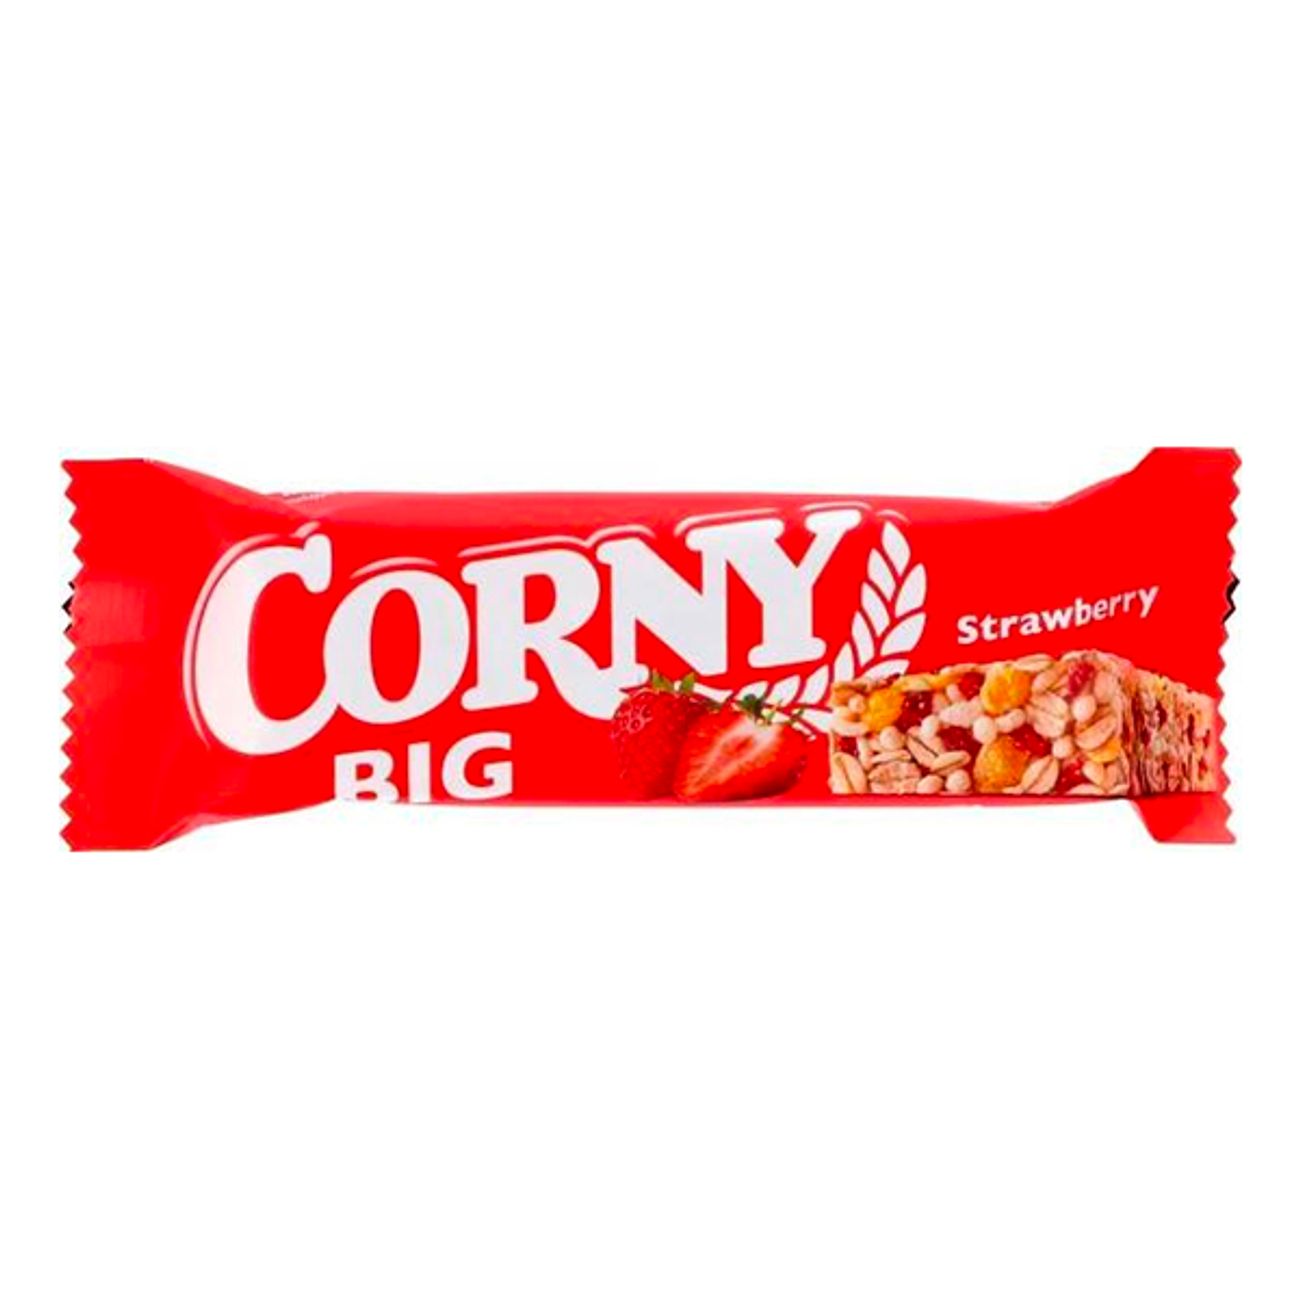 corny-big-strawberry-89014-1